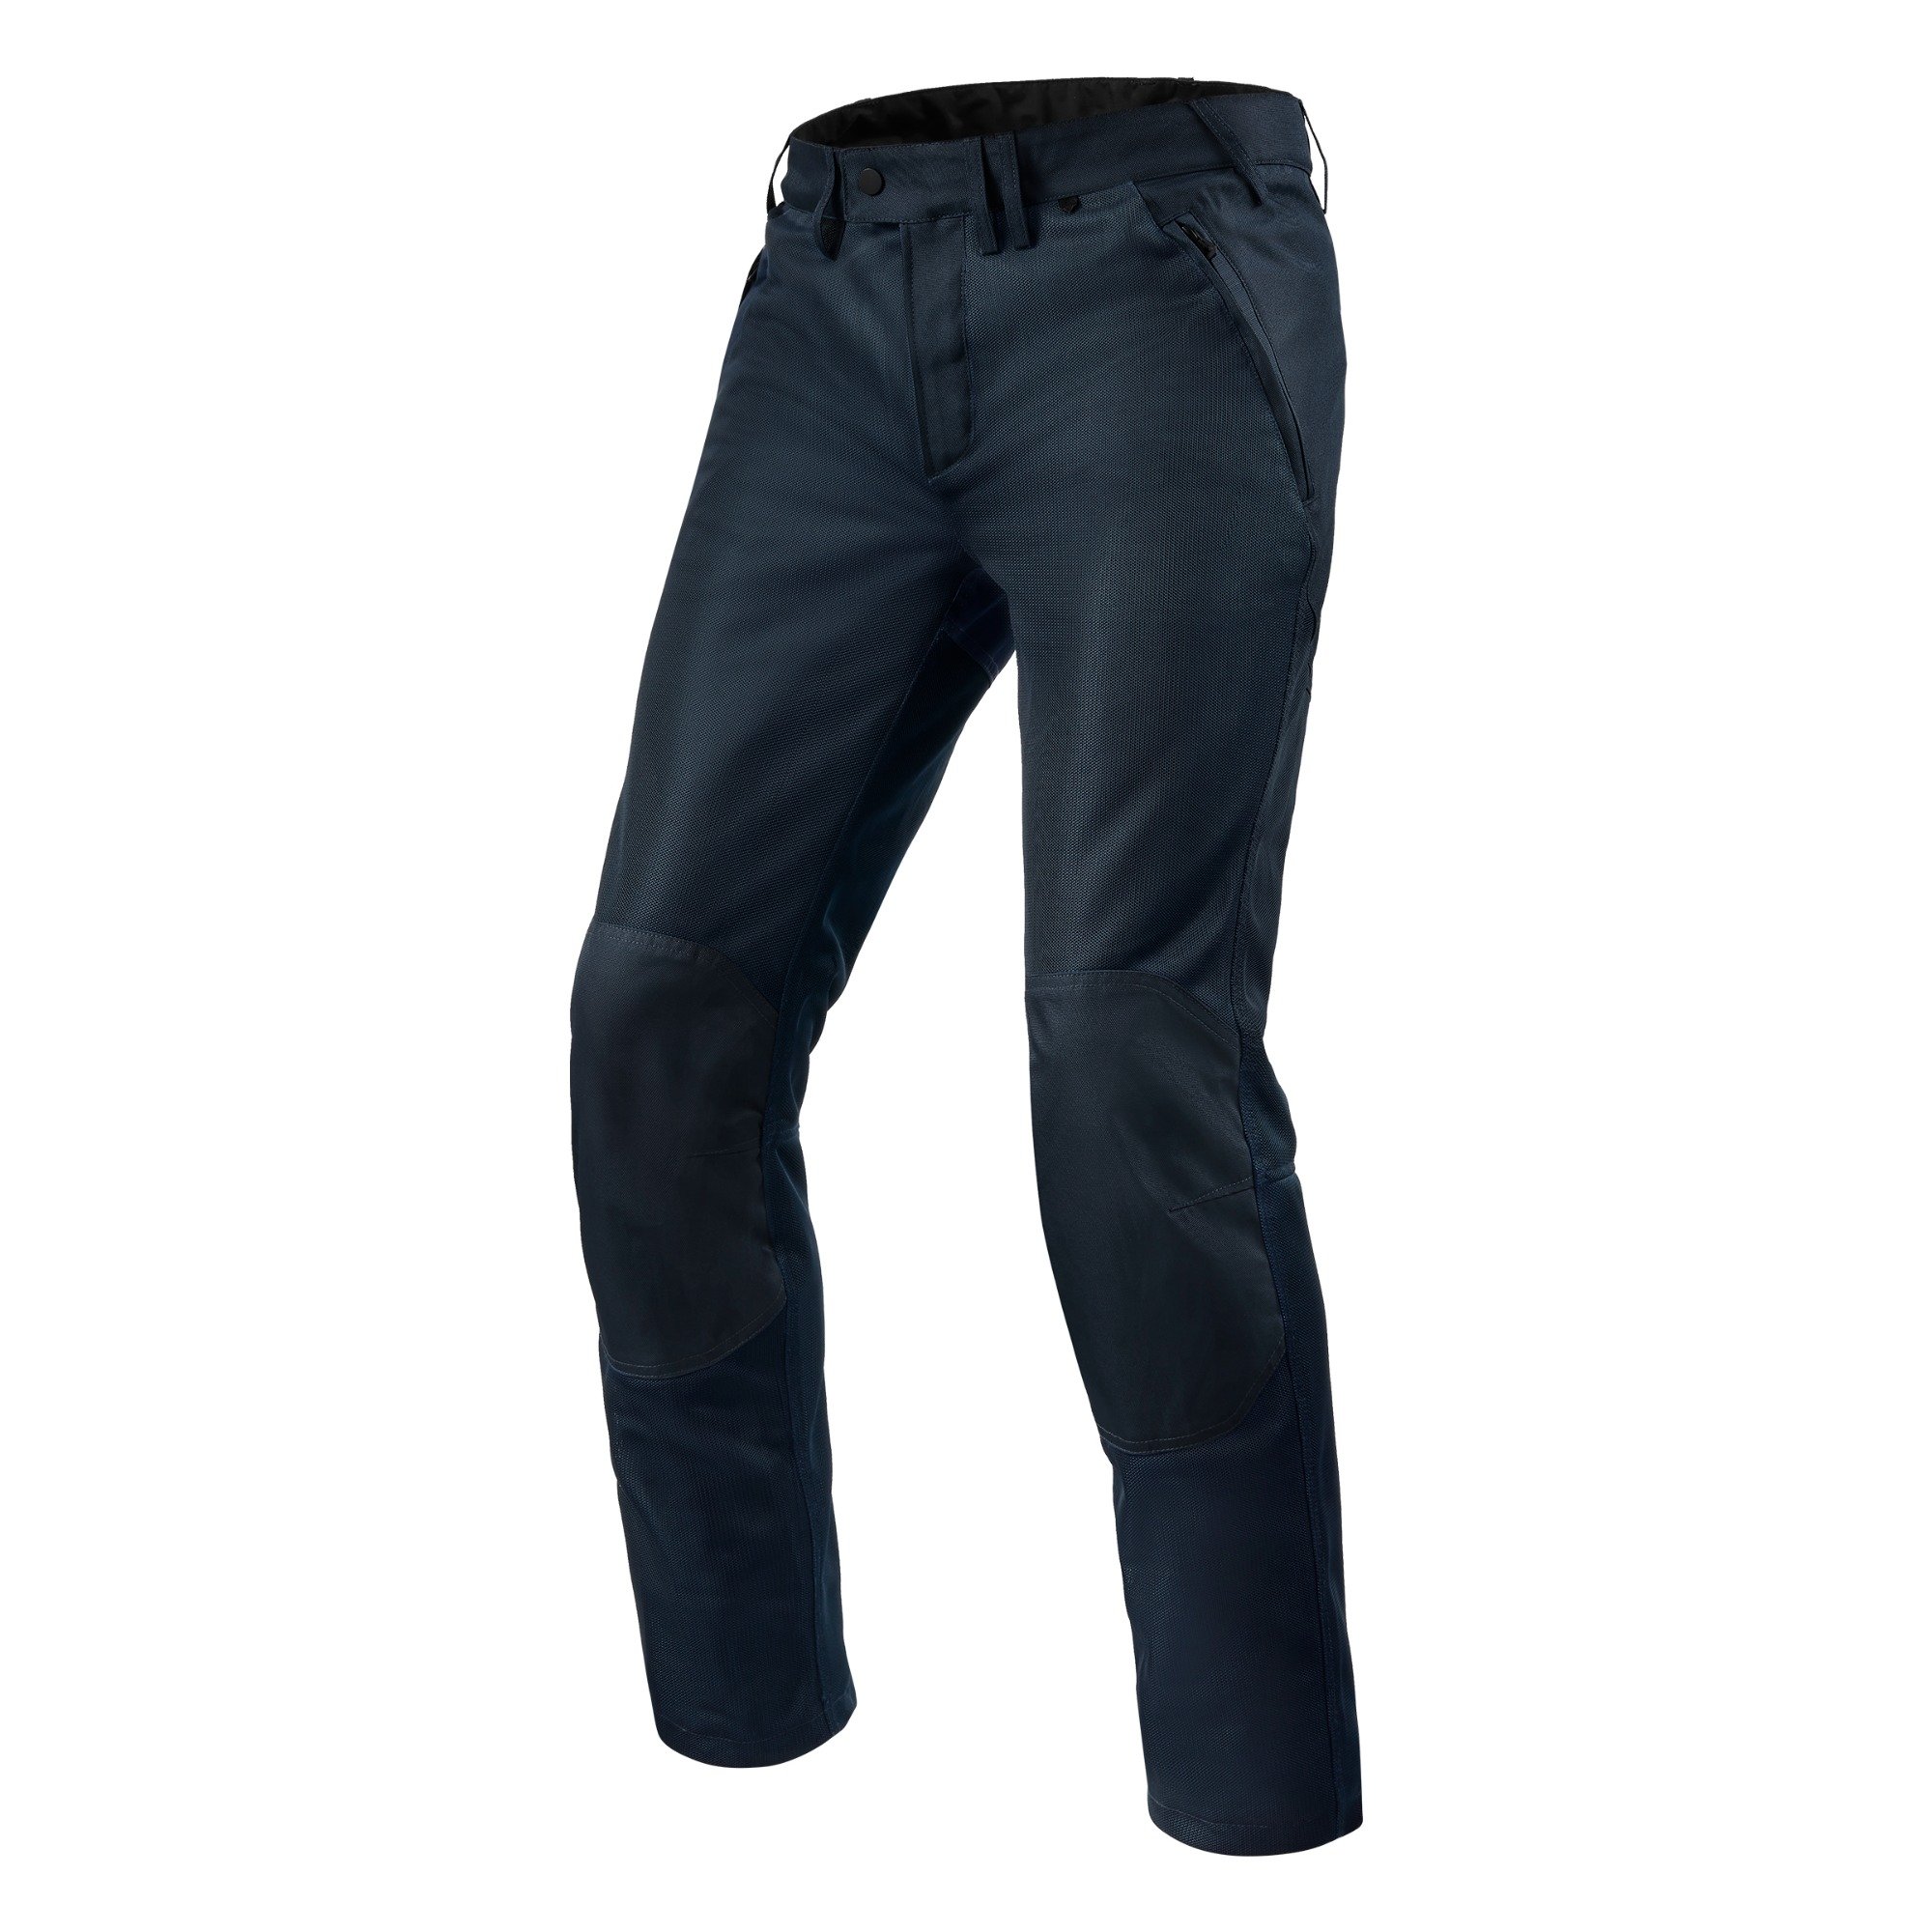 Image of REV'IT! Pants Eclipse 2 Dark Blue Long Motorcycle Pants Size S ID 8700001369060